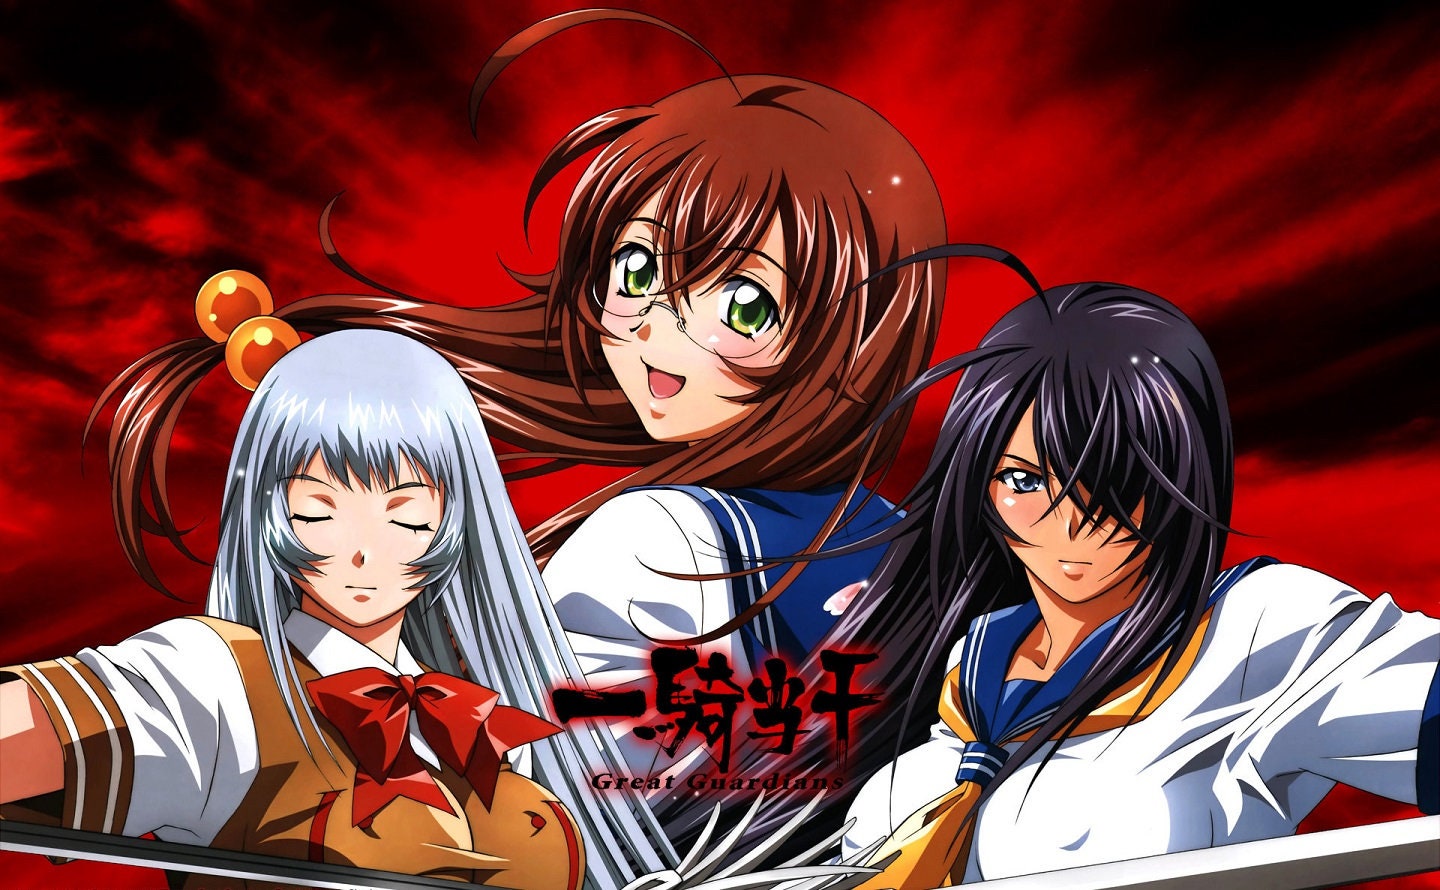 Ikki Tousen Ikkitousen: Dragon Destiny Anime Fan service Desktop , Anime  transparent background PNG clipart